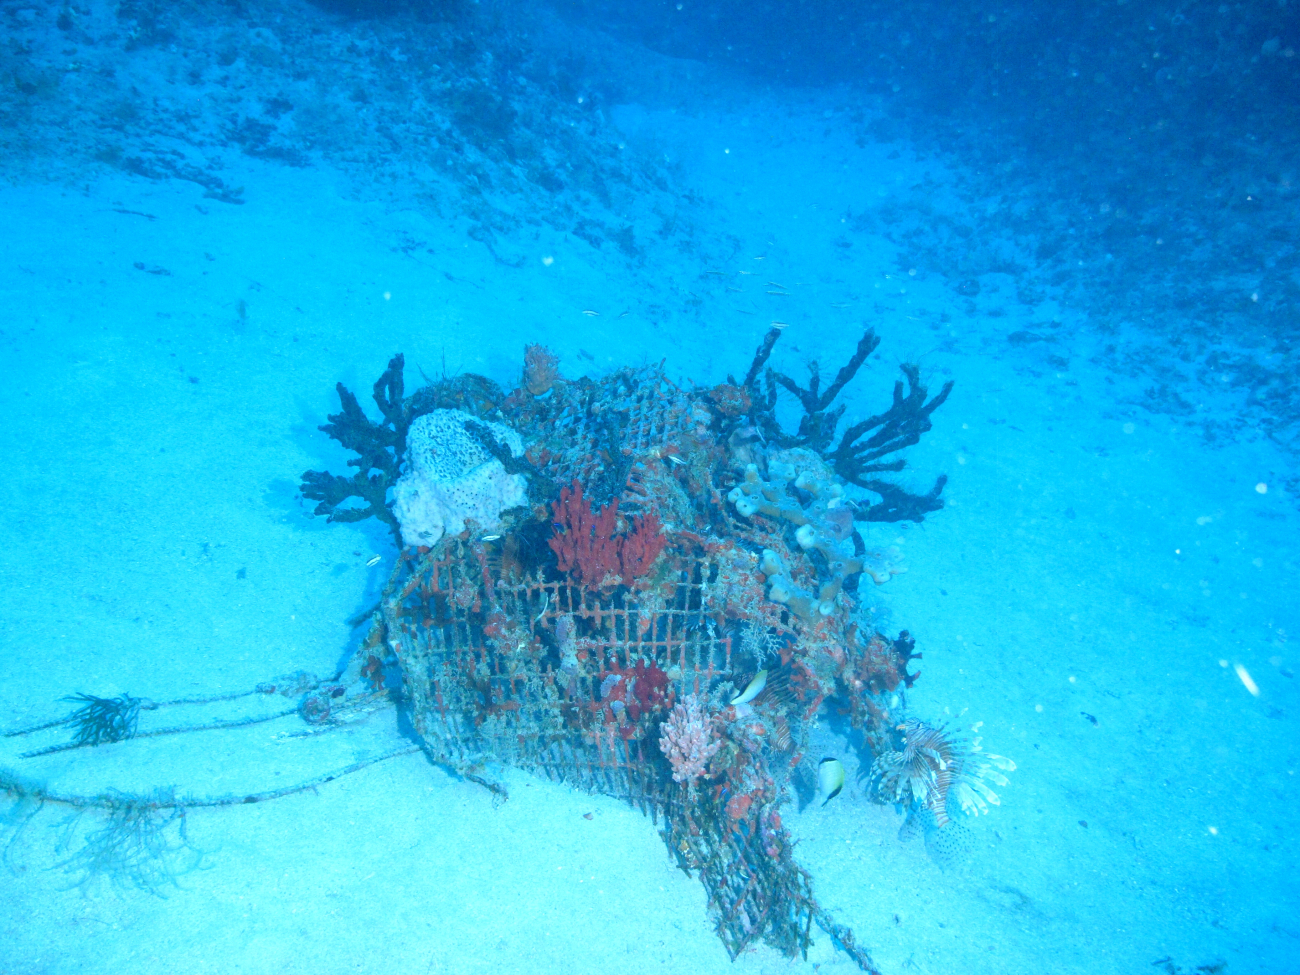 Marine debris - derelict fish trap with numerous sponges